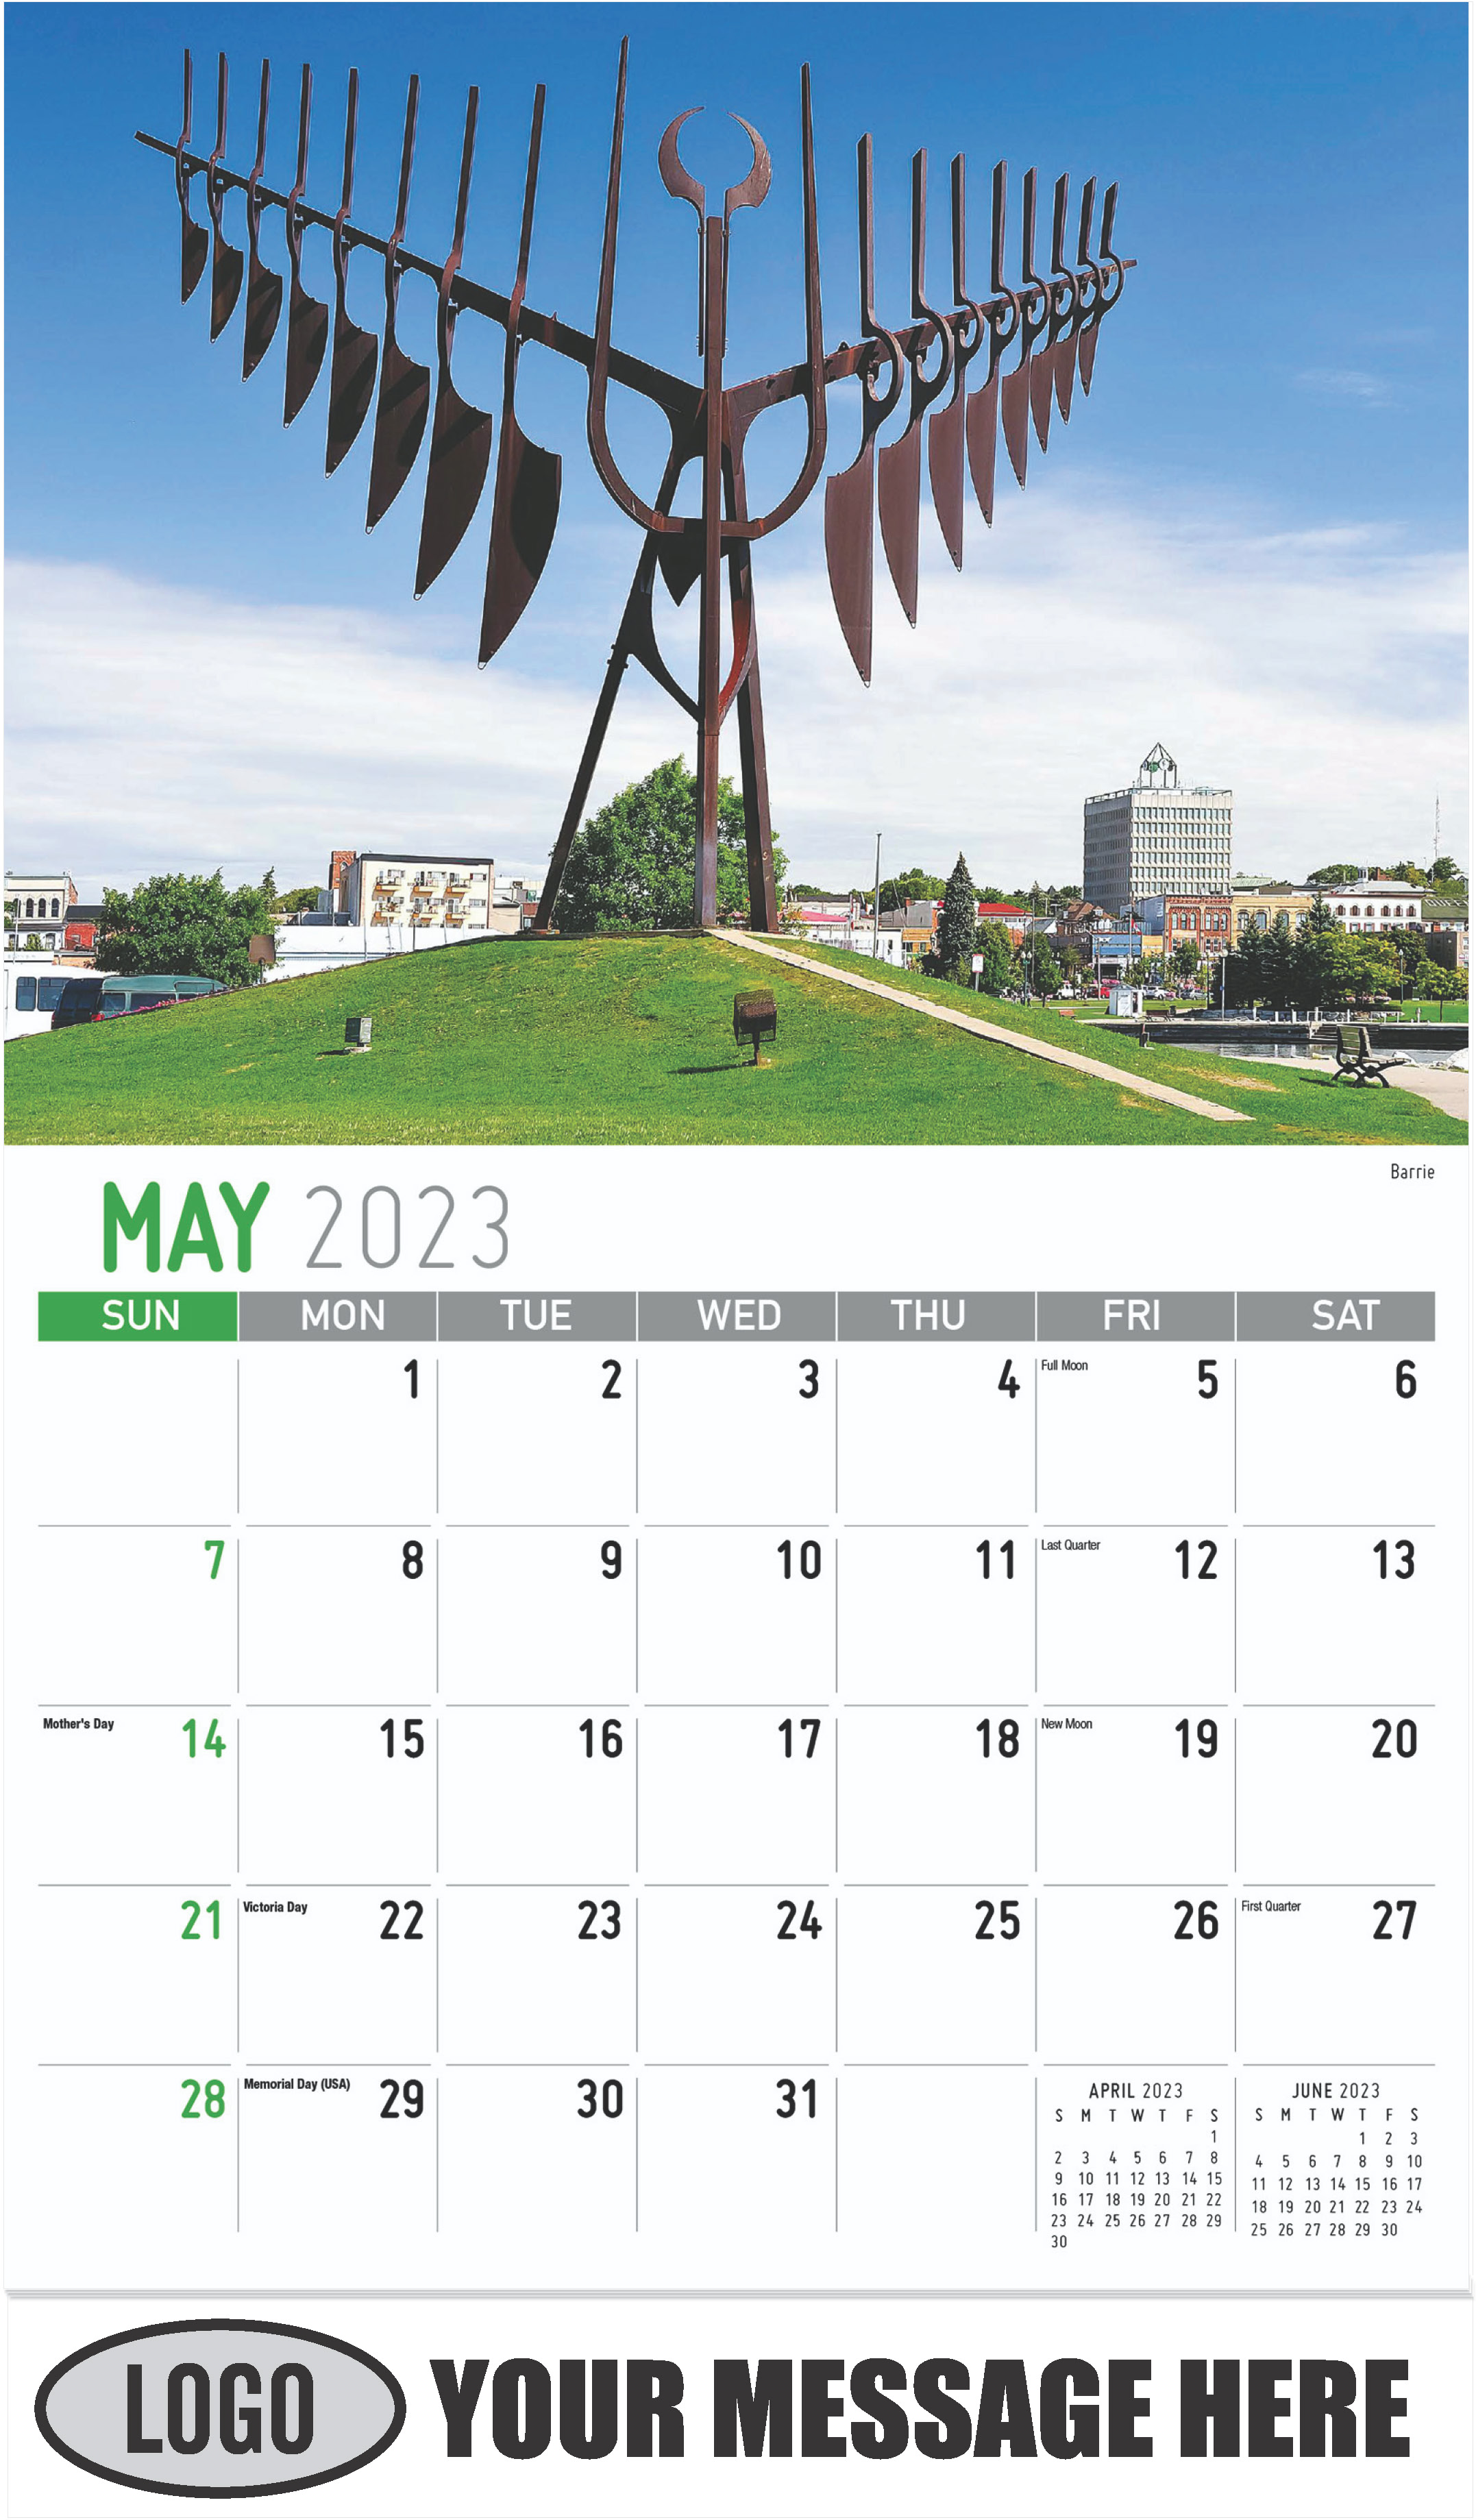 Barrie - May - Scenes of Ontario 2023 Promotional Calendar